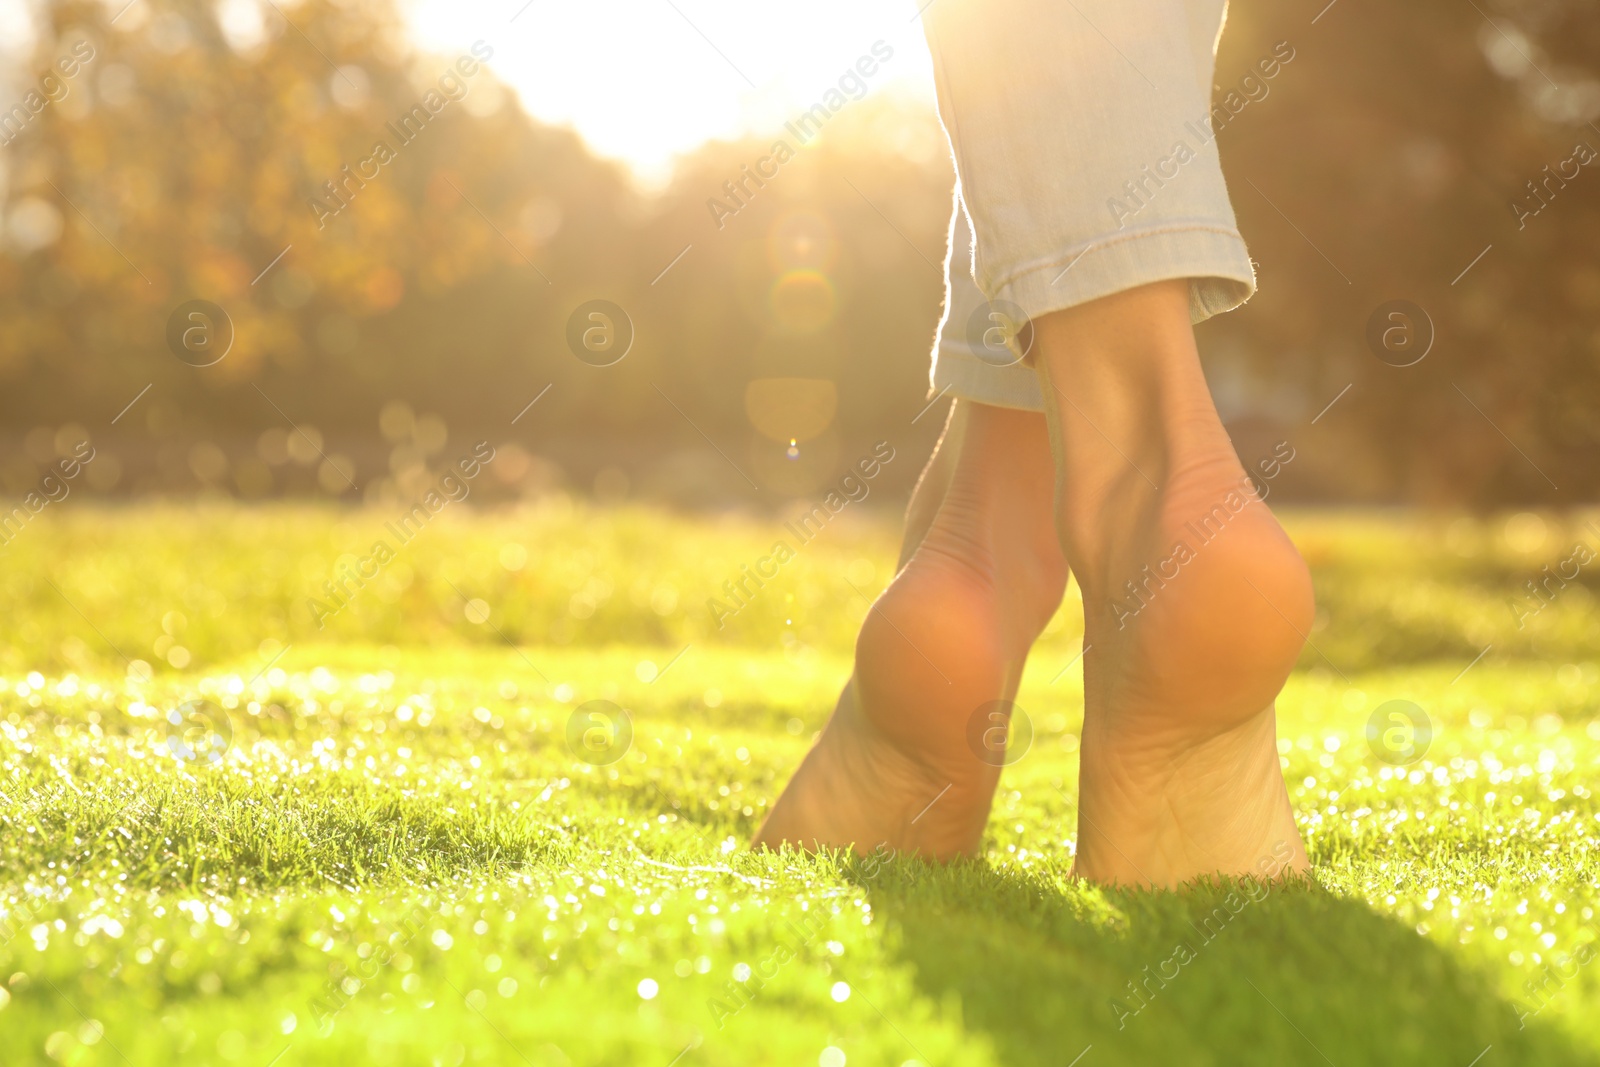 Photo of Young woman walking barefoot on fresh green grass, closeup